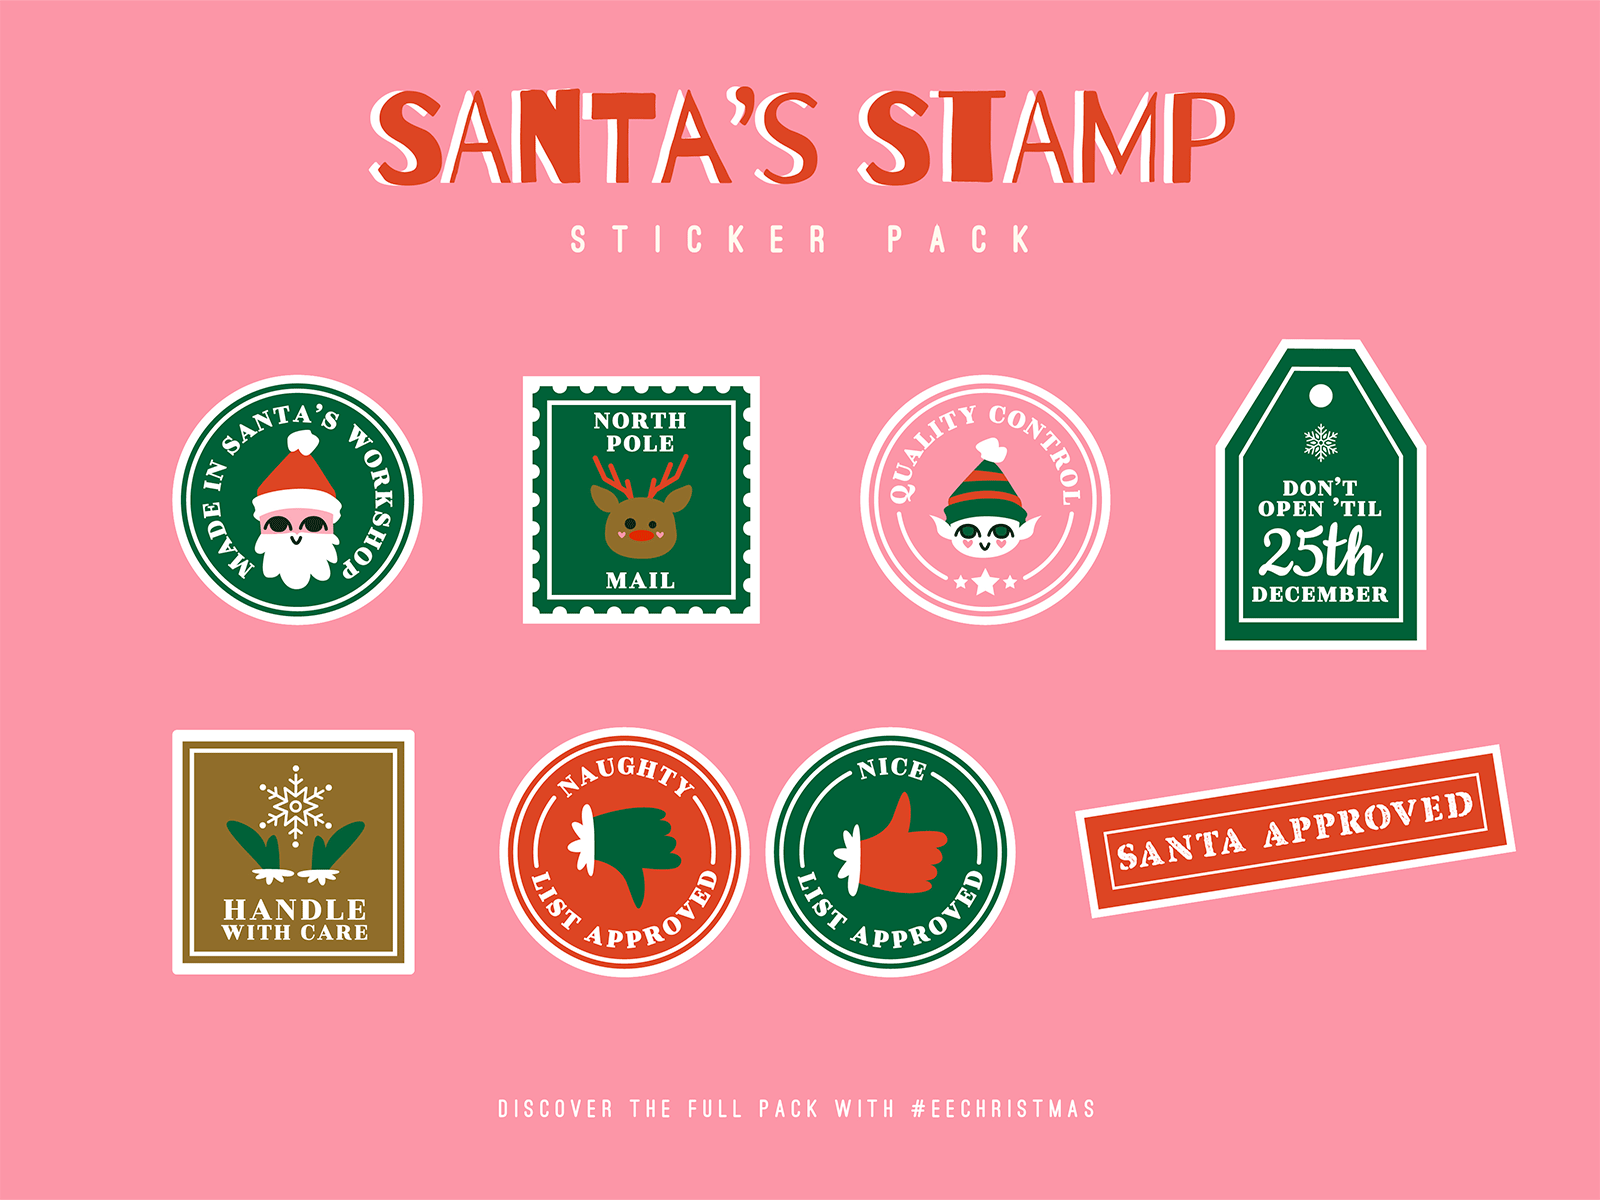 Santa's Stamp sticker pack 2021